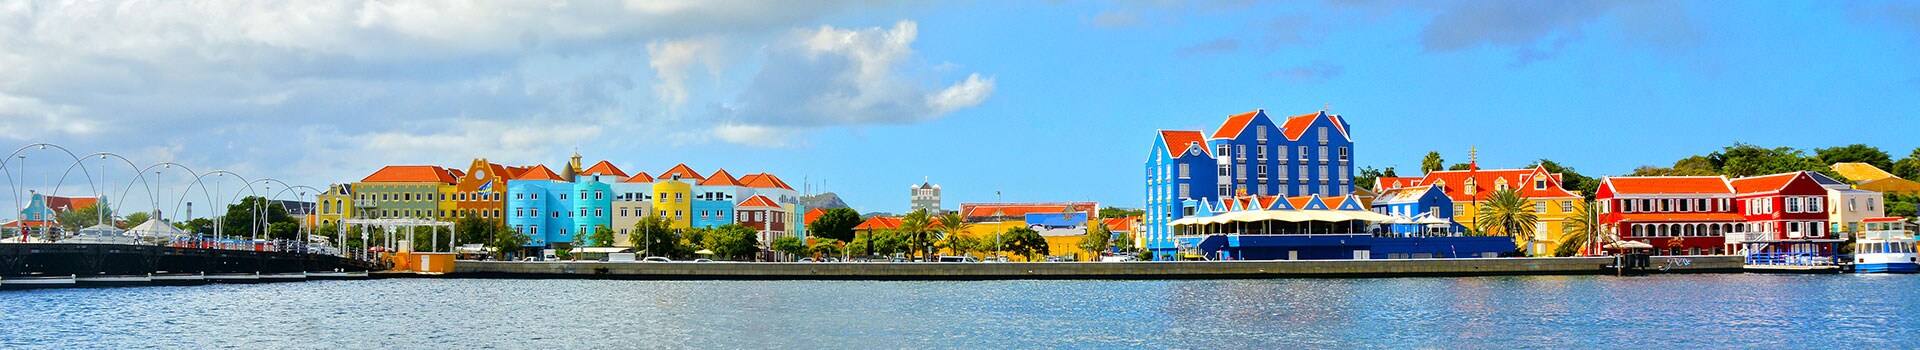 Lisbon - Willemstad